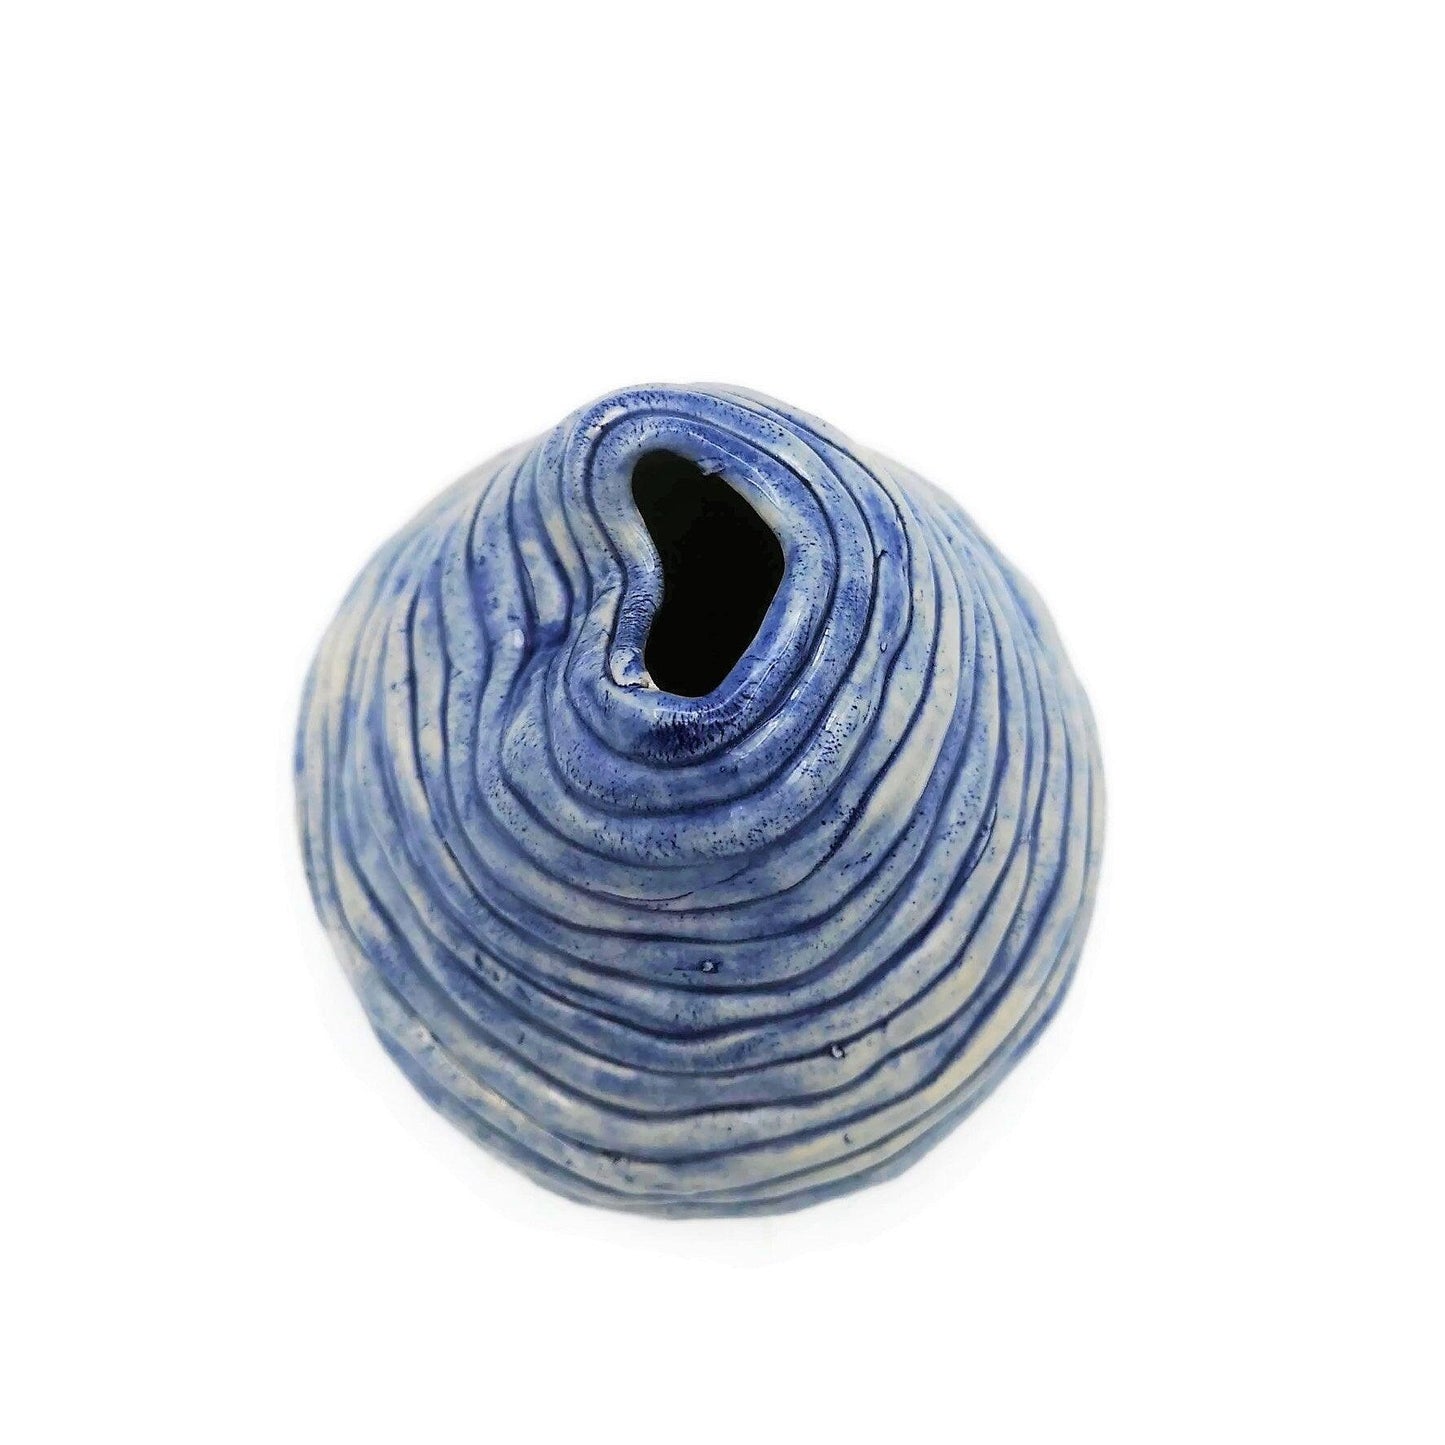 1pc Blue Handmade Ceramic Small Vase Irregular Shaped Pottery Abstract Sculpture Ceramic Vessel Best Sellers Mom Birthday Gift From Daughter - Ceramica Ana Rafael